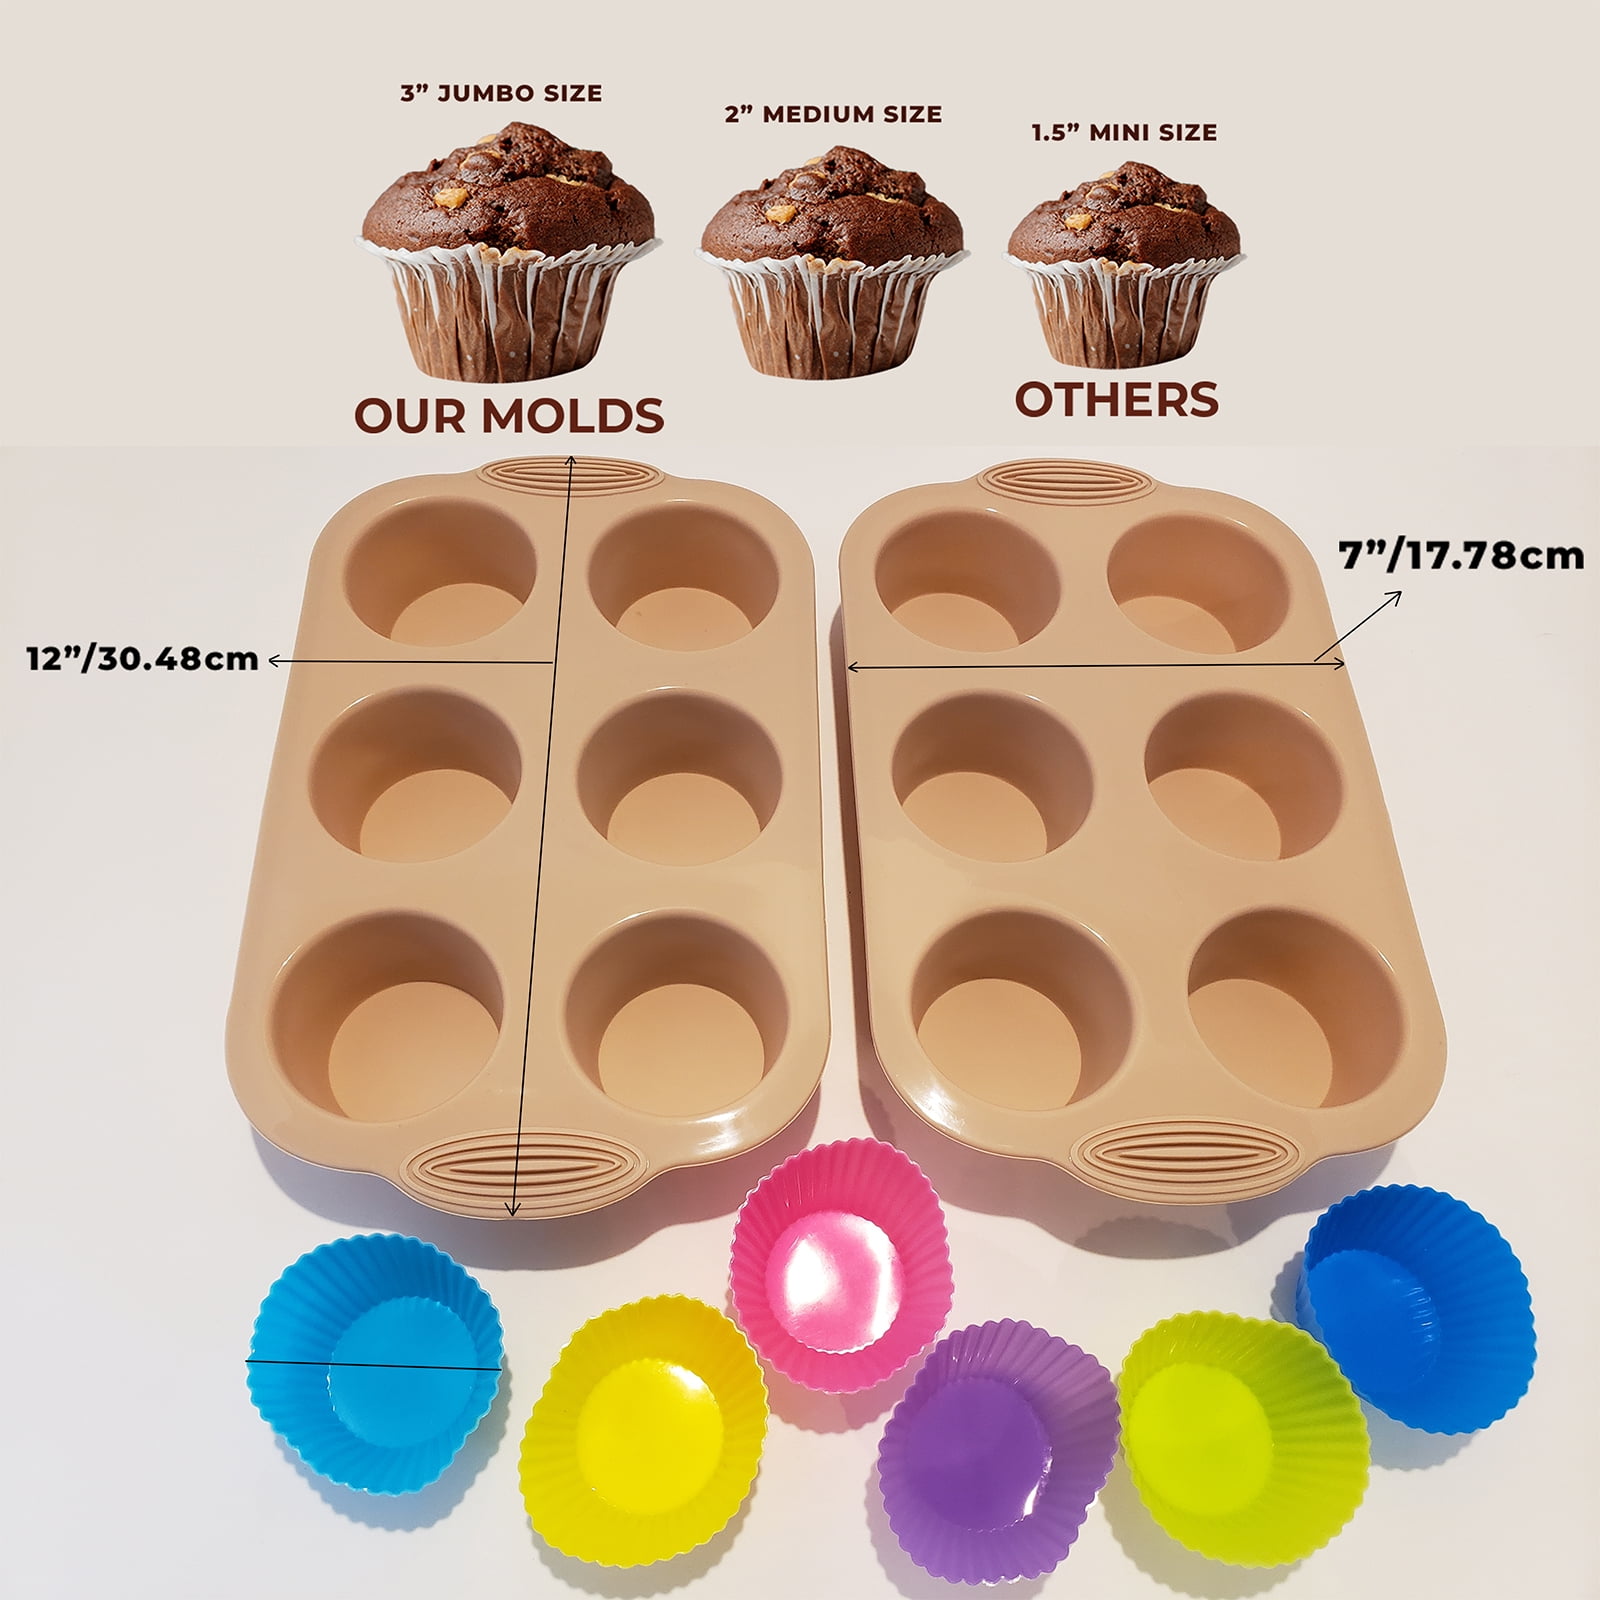 Vnray 2 Pack Silicone Muffin Baking Pan & Large Cupcake Tray 6 Cup -  Nonstick Giant Cake Molds/Tin, Large Silicon Bakeware, BPA Free, Dishwasher  